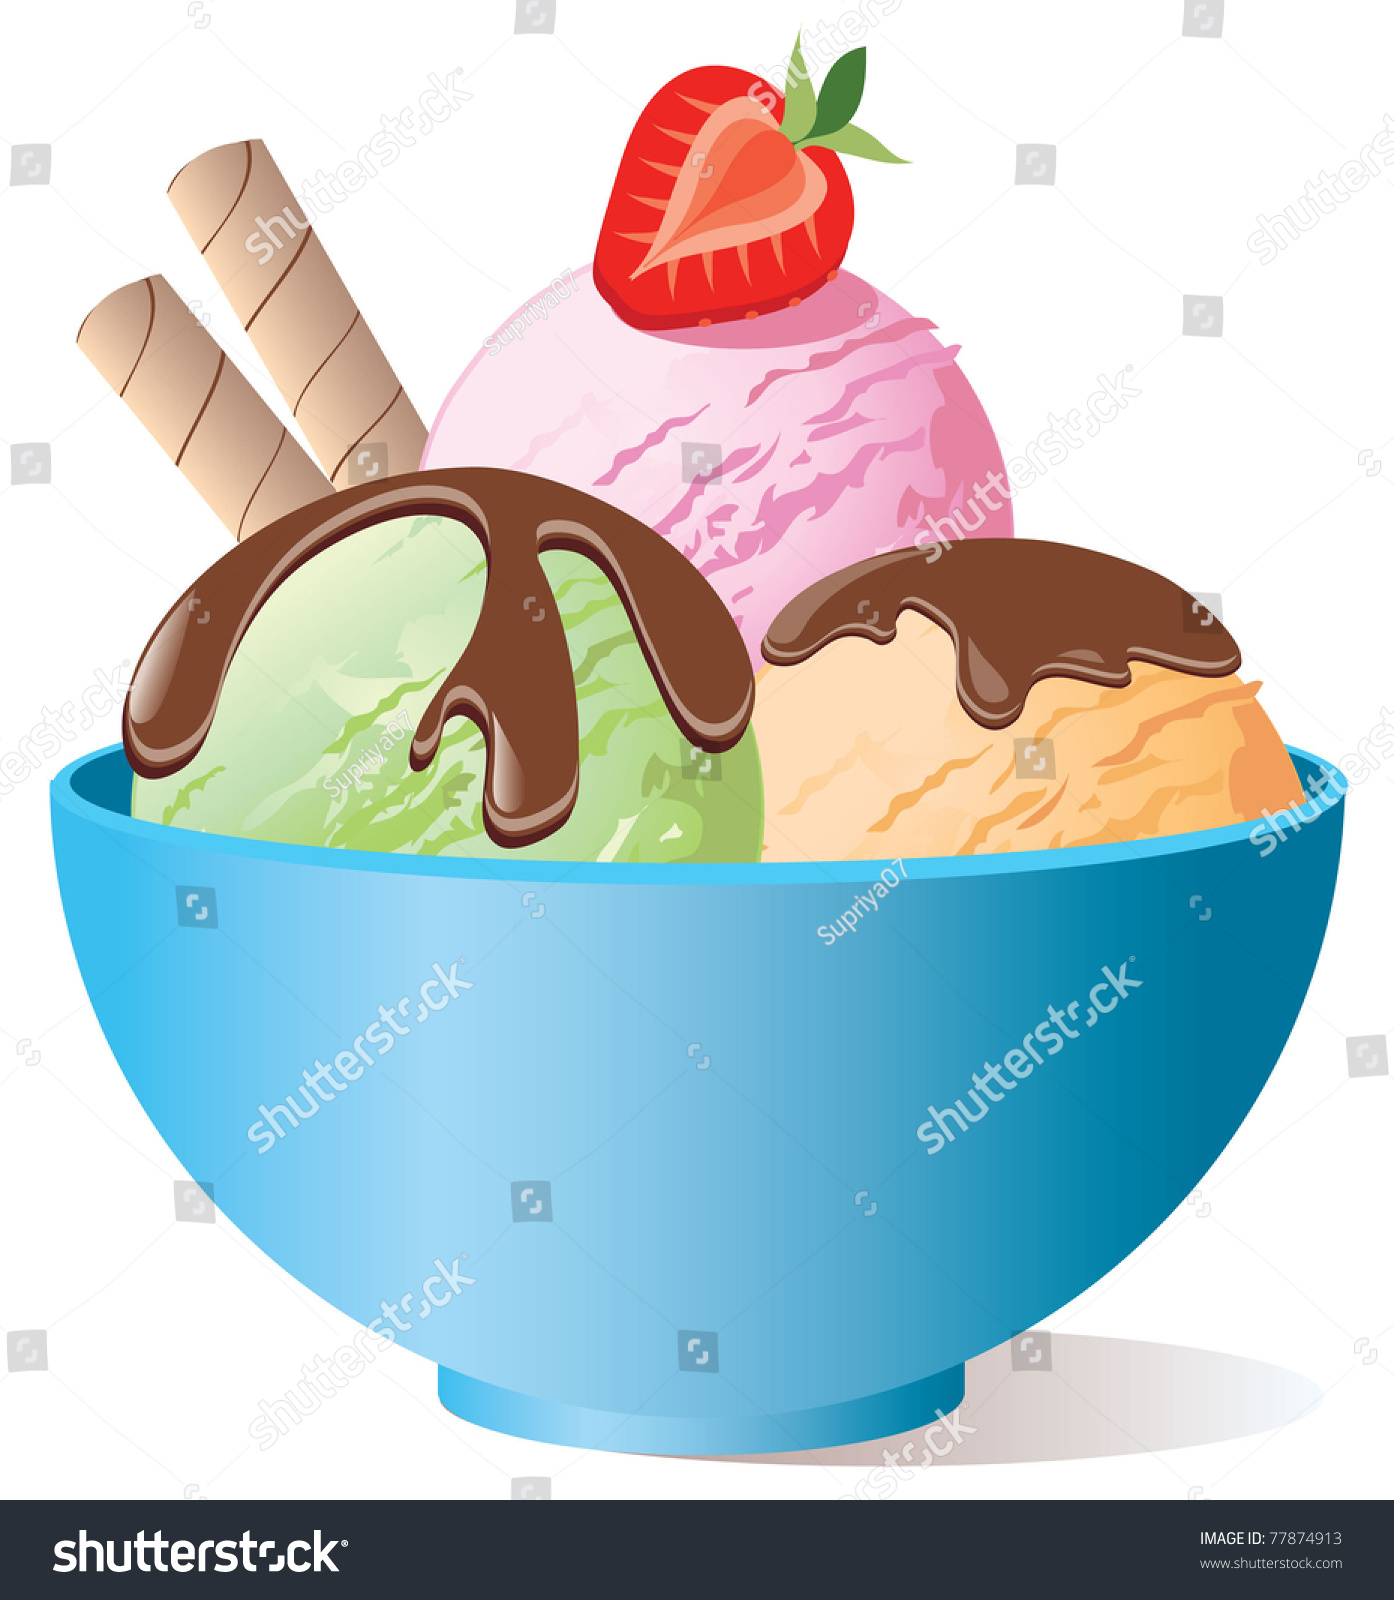 bowl of ice cream clipart - photo #22